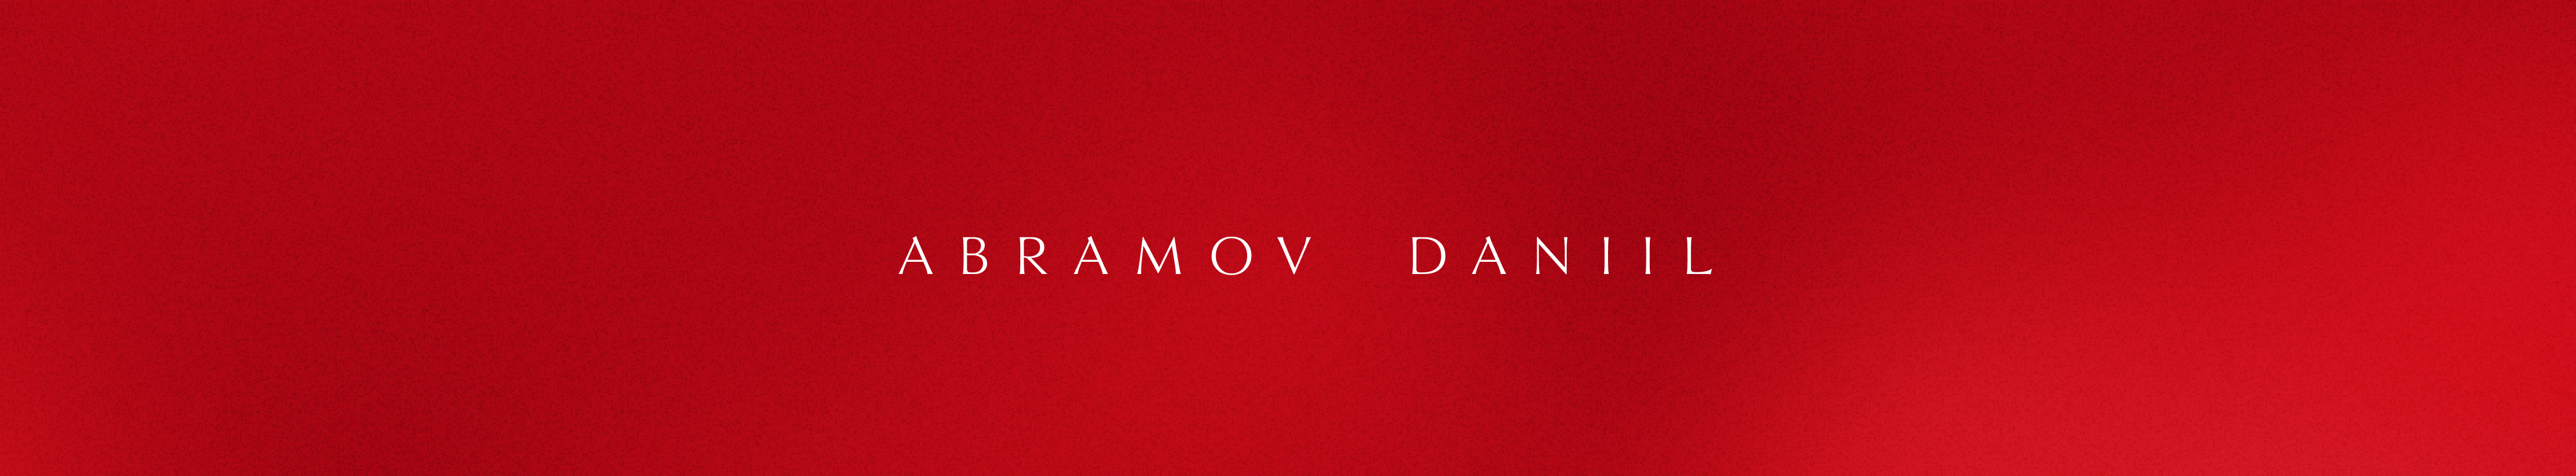 Daniil Abramov's profile banner